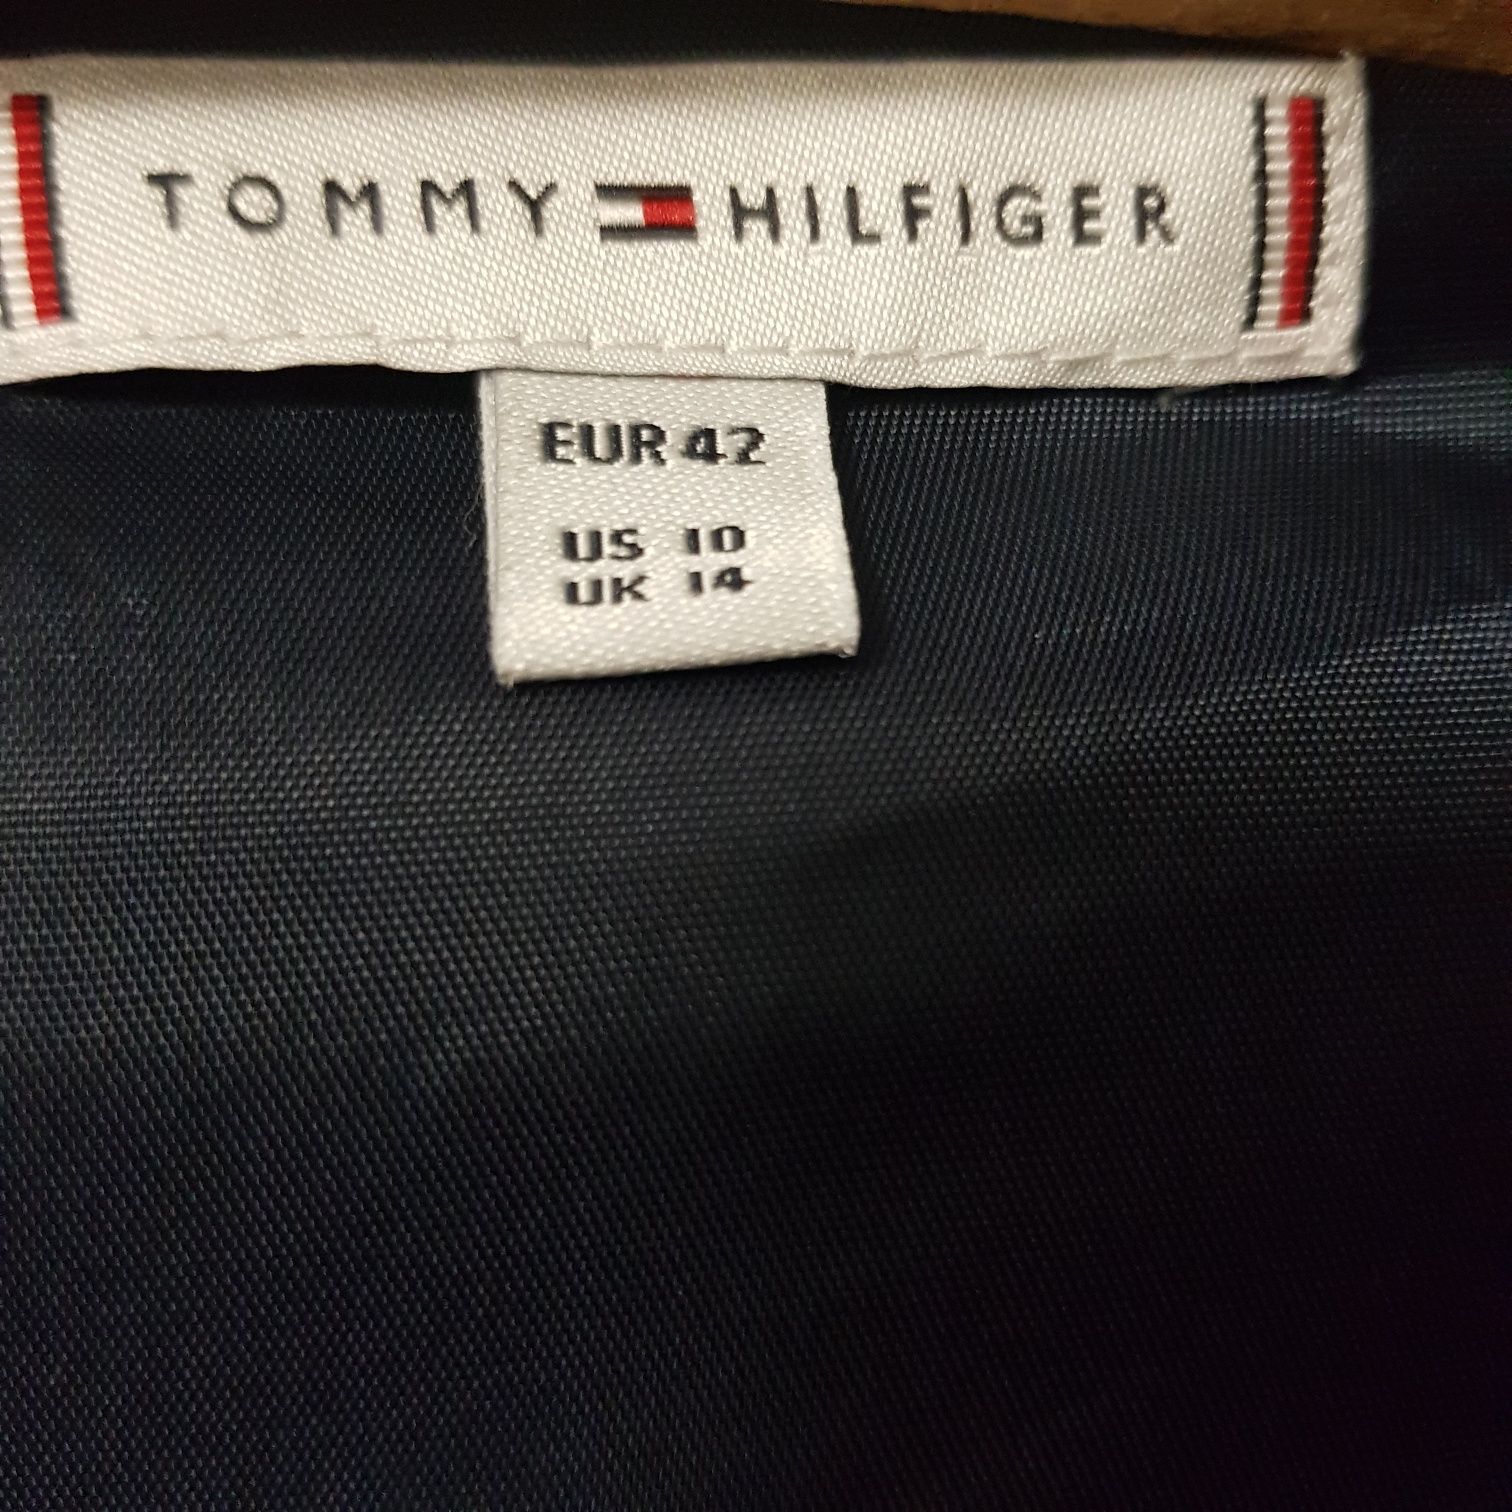 Sacou Tommy Hilfiger marimea XL